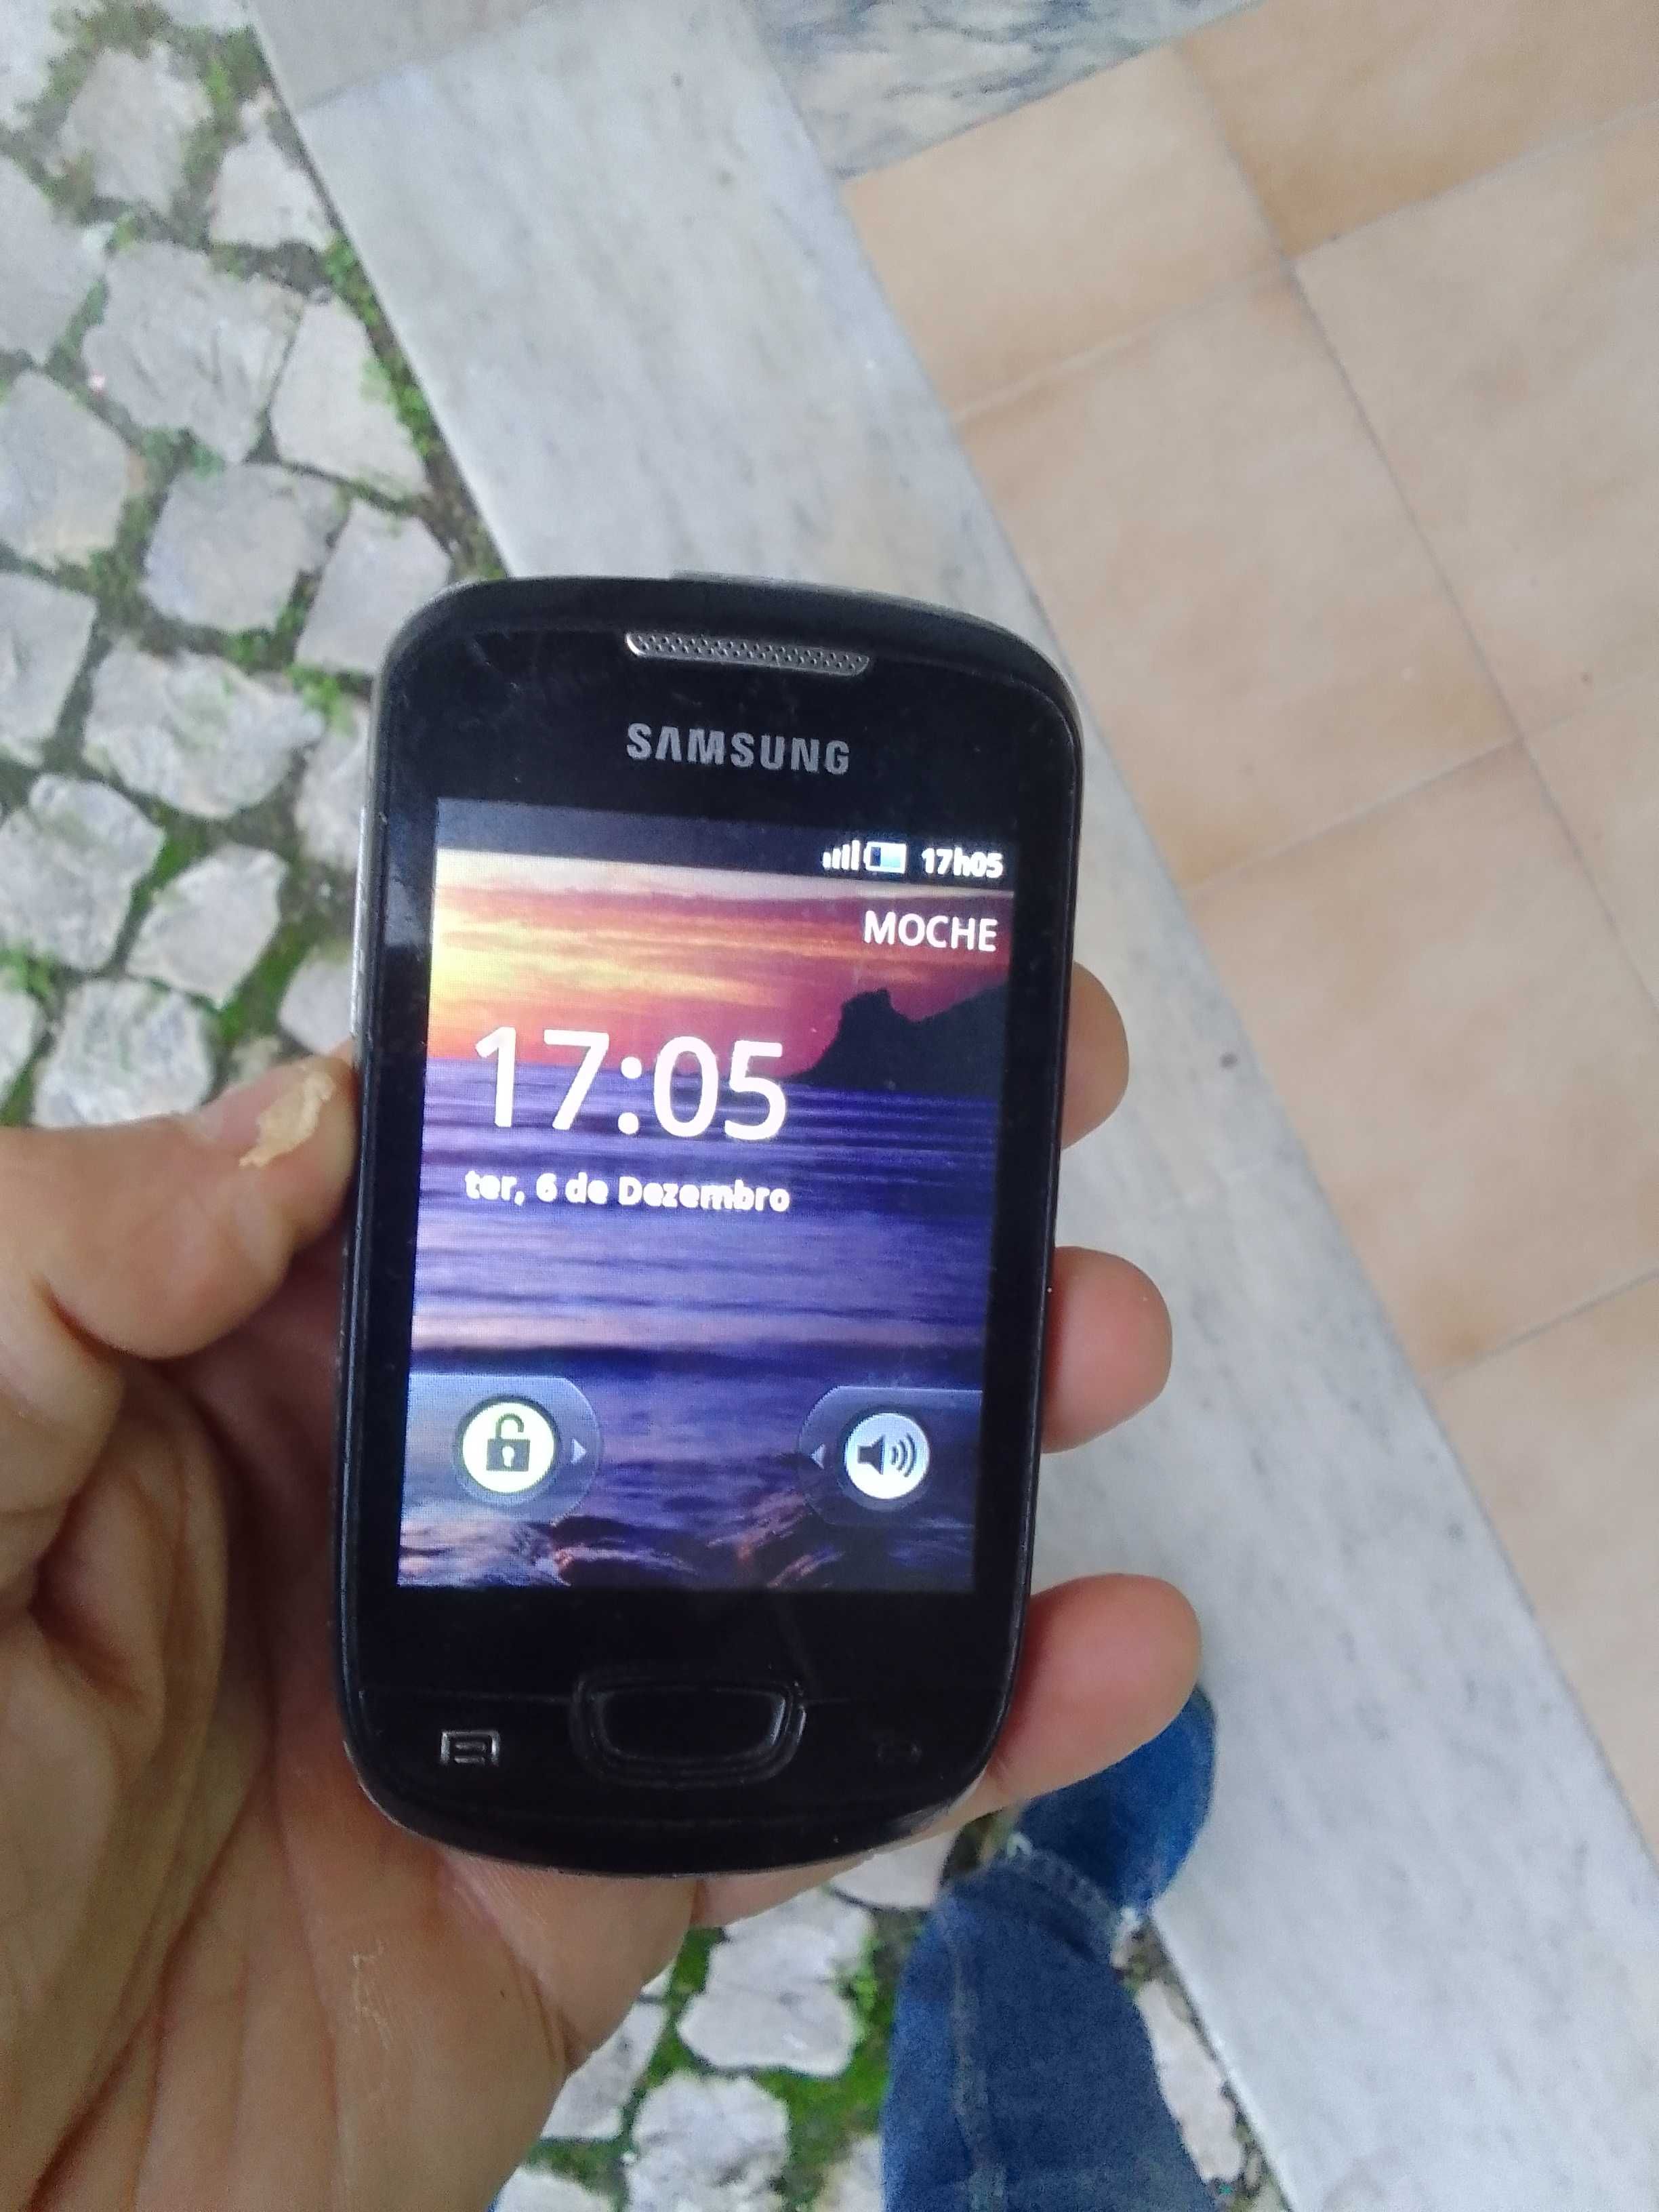 Telemóvel Samsung Galaxy Mini, Estimado